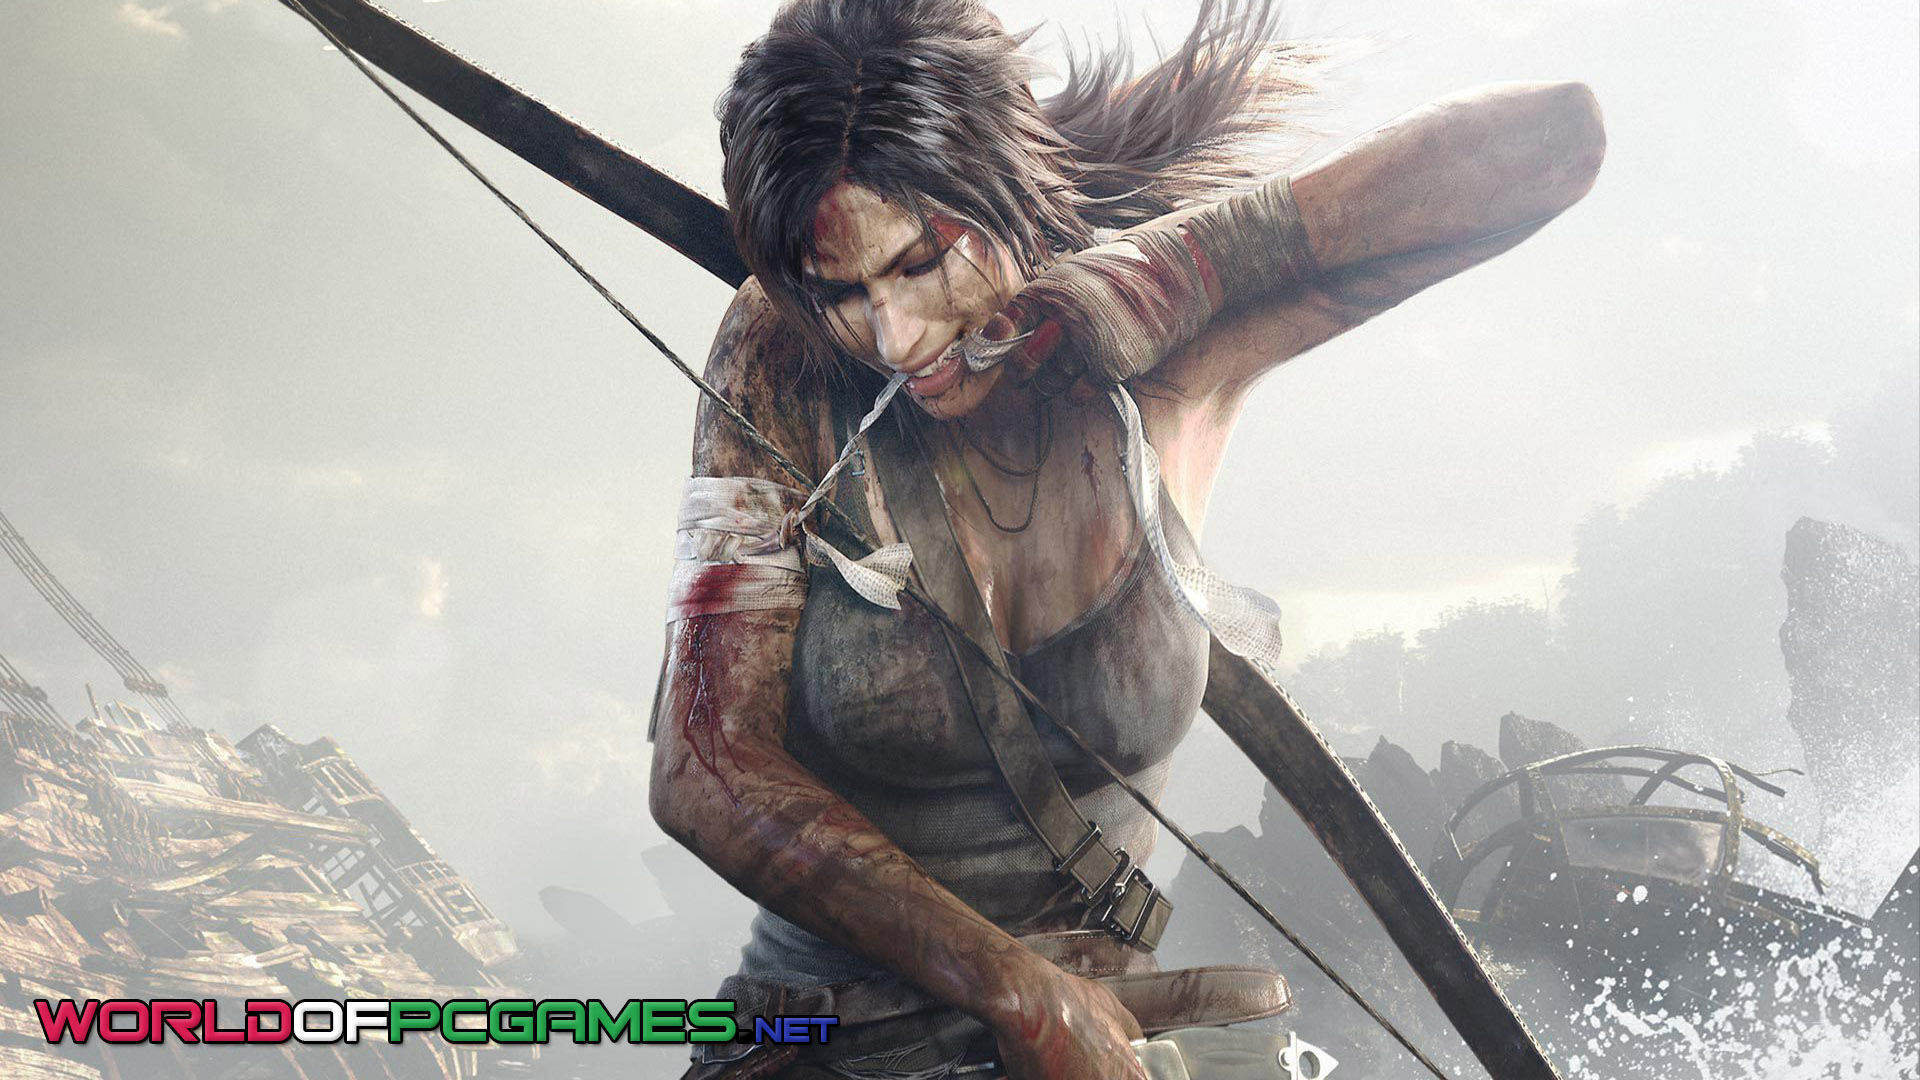 Tomb Raider 2013 Free Download PC Game By worldof-pcgames.netm